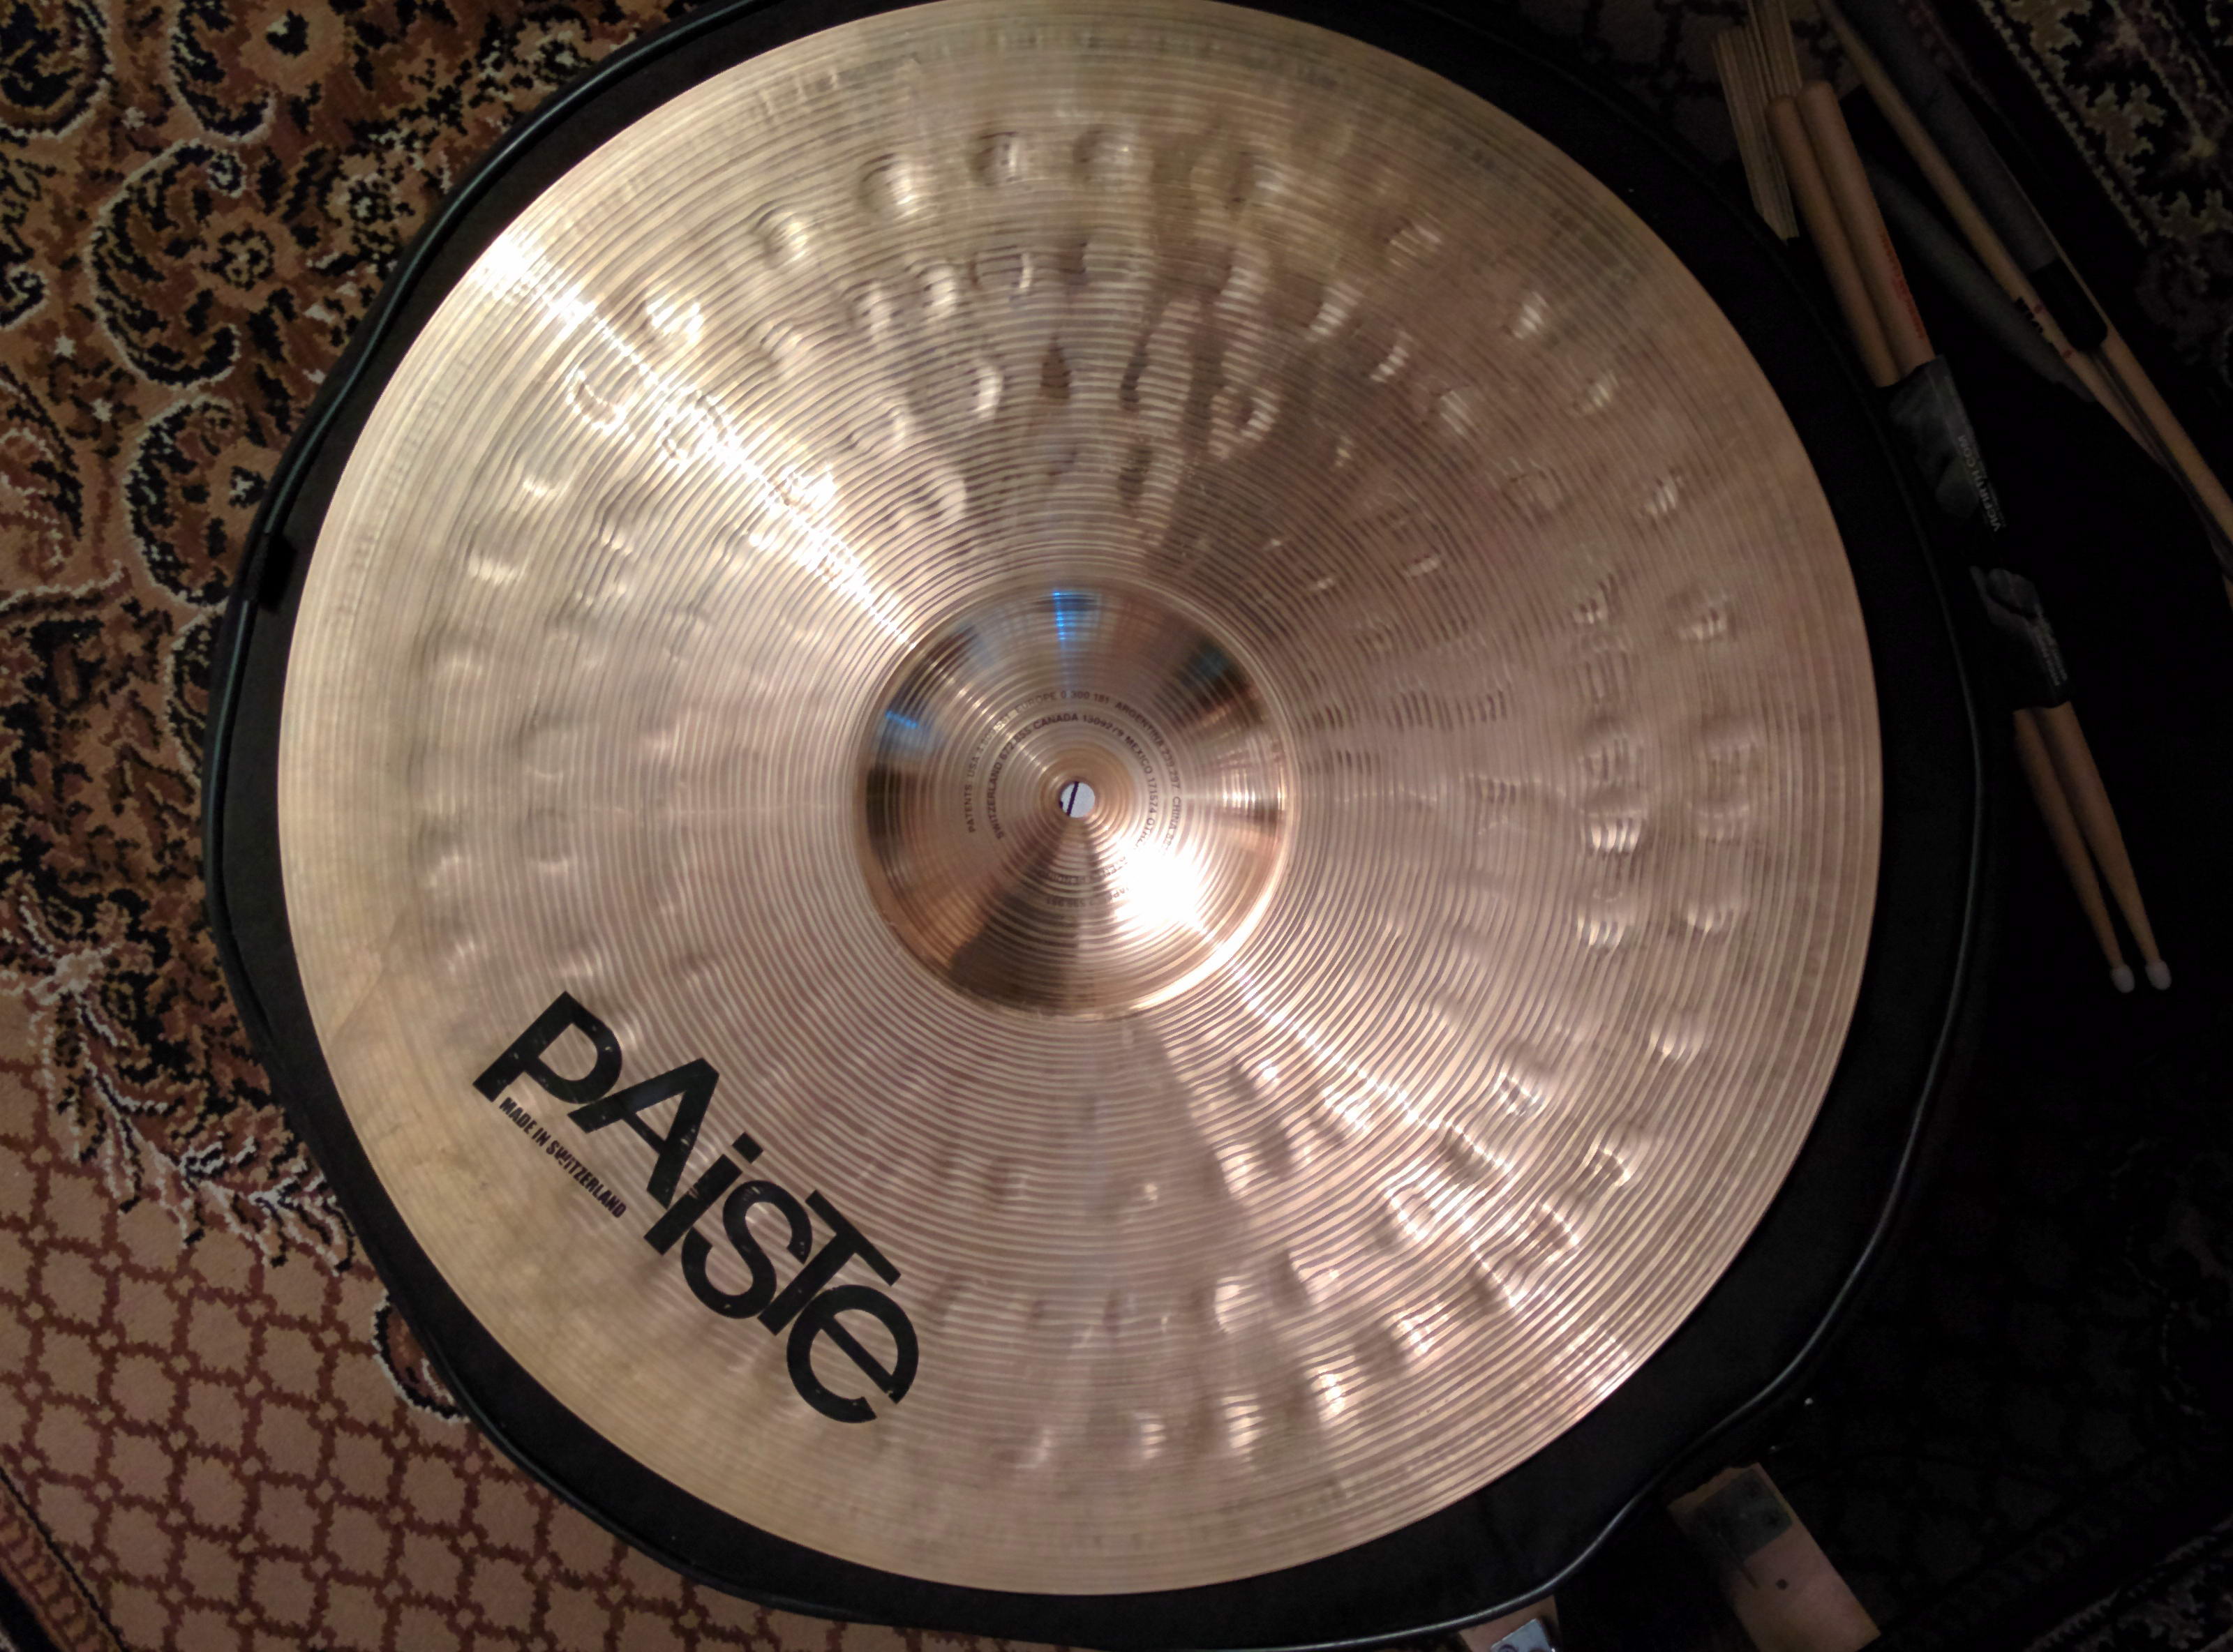 Paiste Signature 21 Dry Heavy Ride - Cymbal